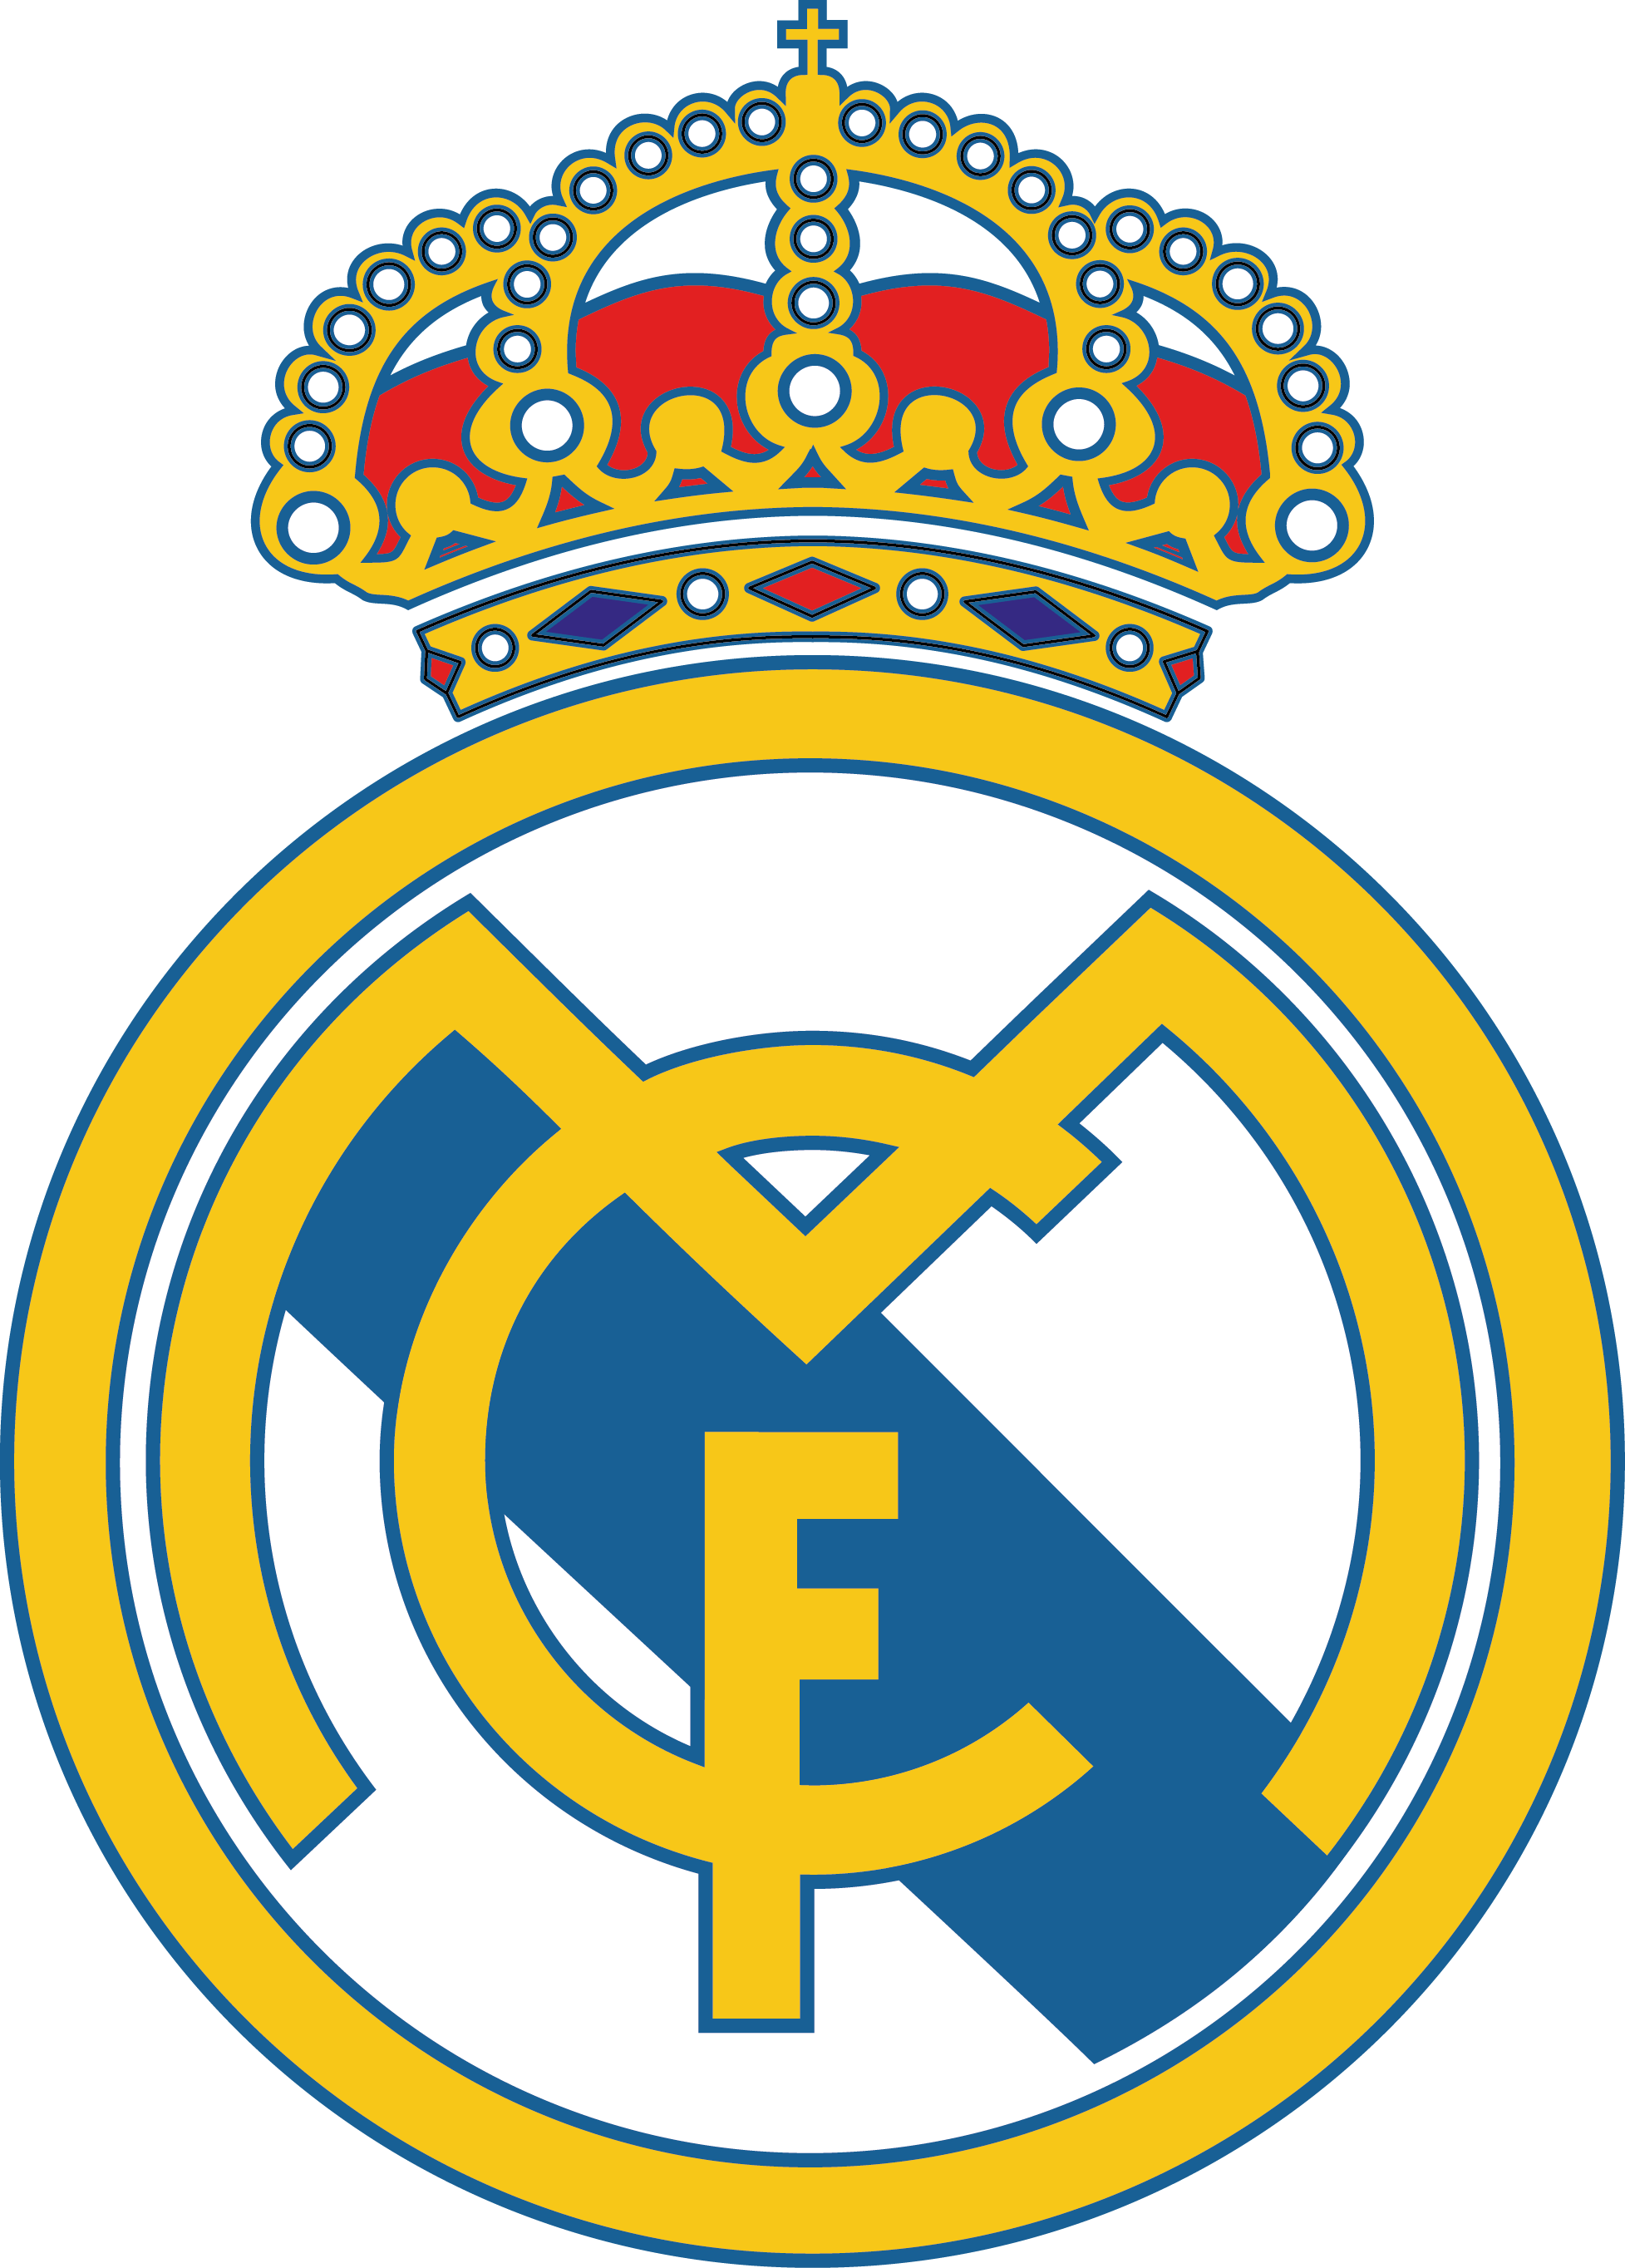 Real Madrid Logo [Real Madrid Club de Futbol]